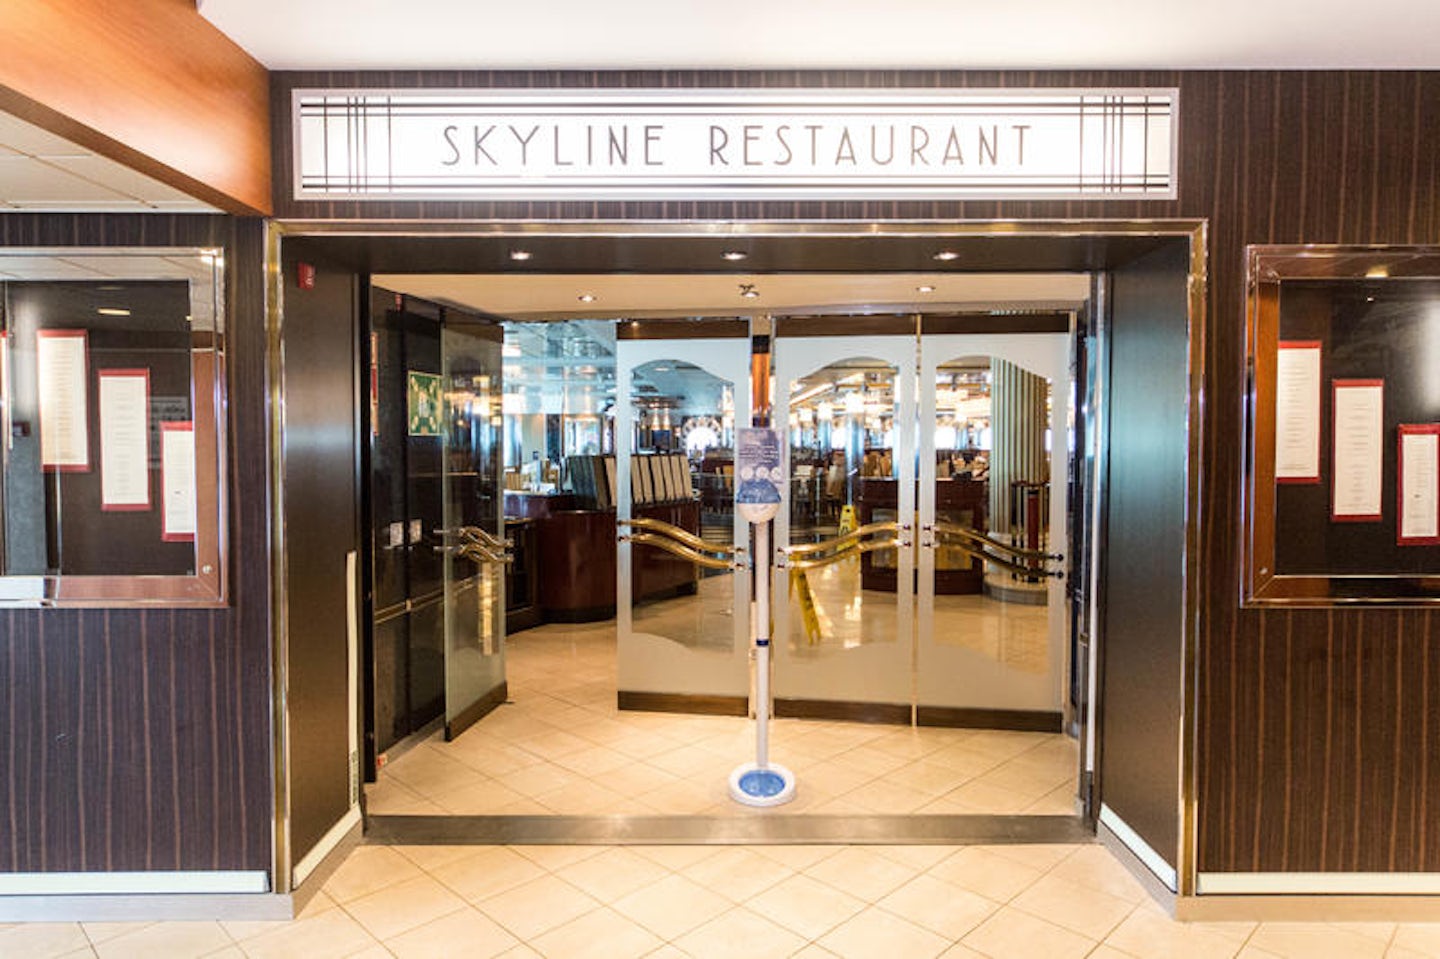 Skyline Restaurant on Pride of America